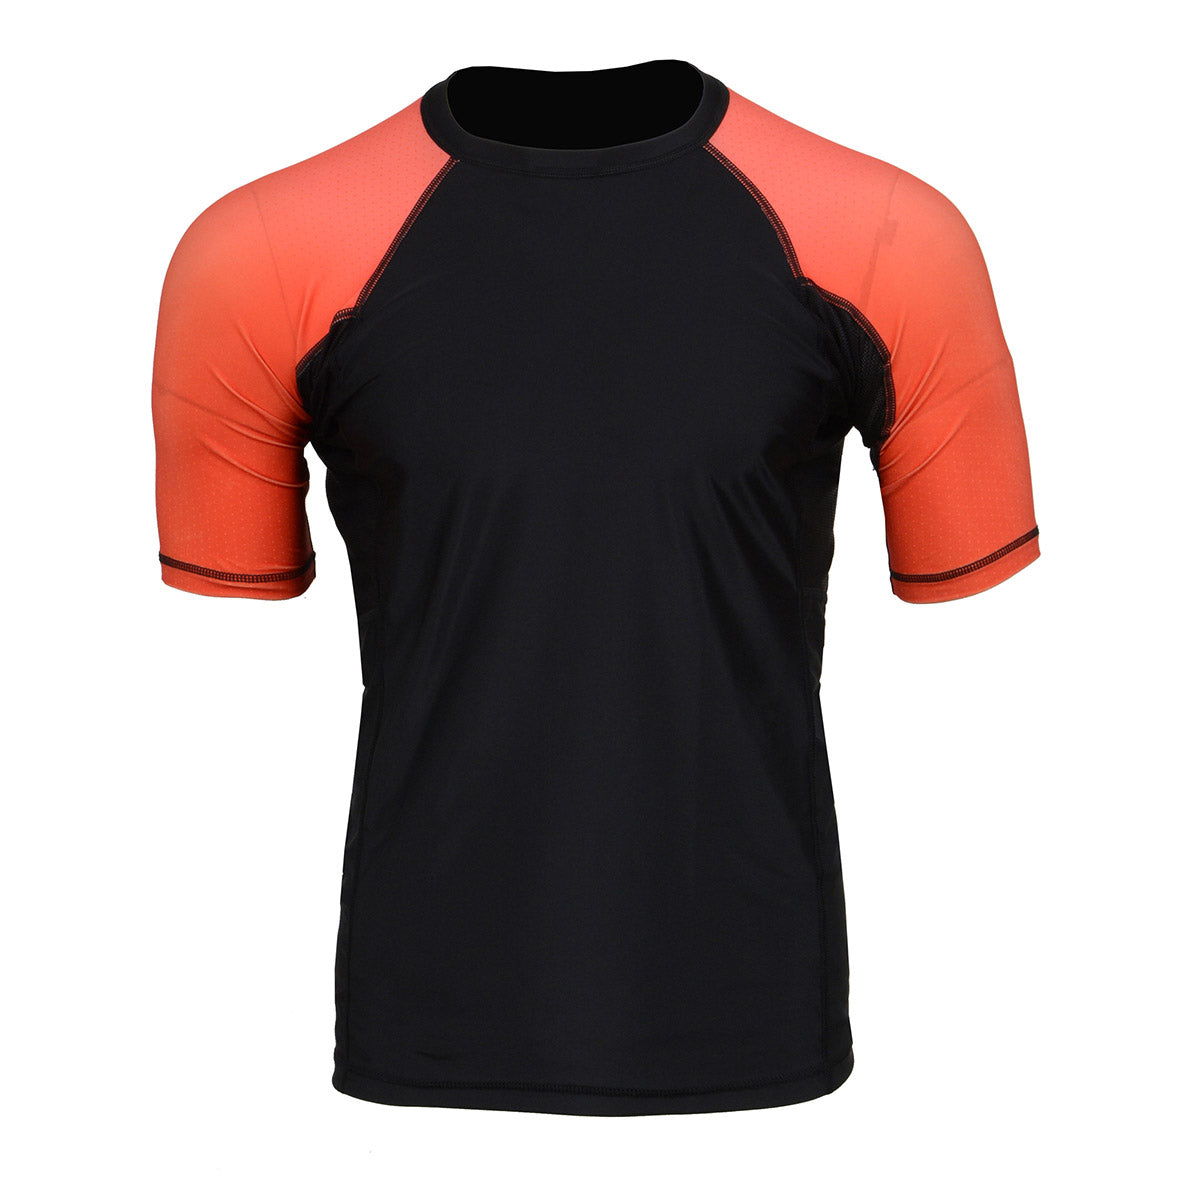 X-Fitness XFM7001 Men's Black and Red Short Sleeve Compression Rash Guard Athletic Shirt- MMA, BJJ, Wrestling, Cross Training